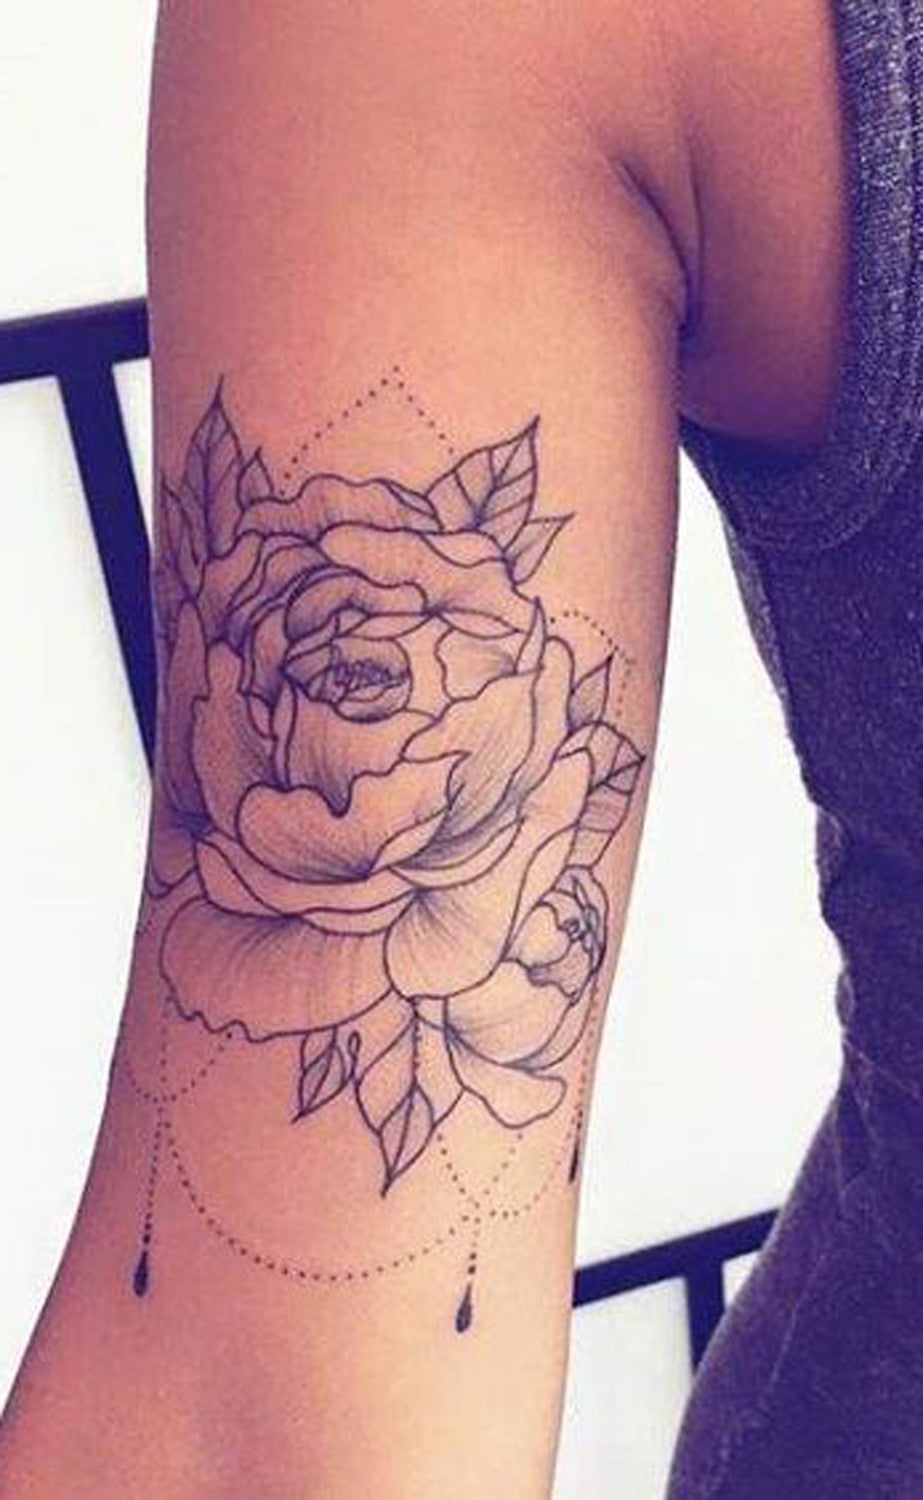 Black Rose Arm Tattoo Ideas - Bicep Tat - MyBodiArt.com